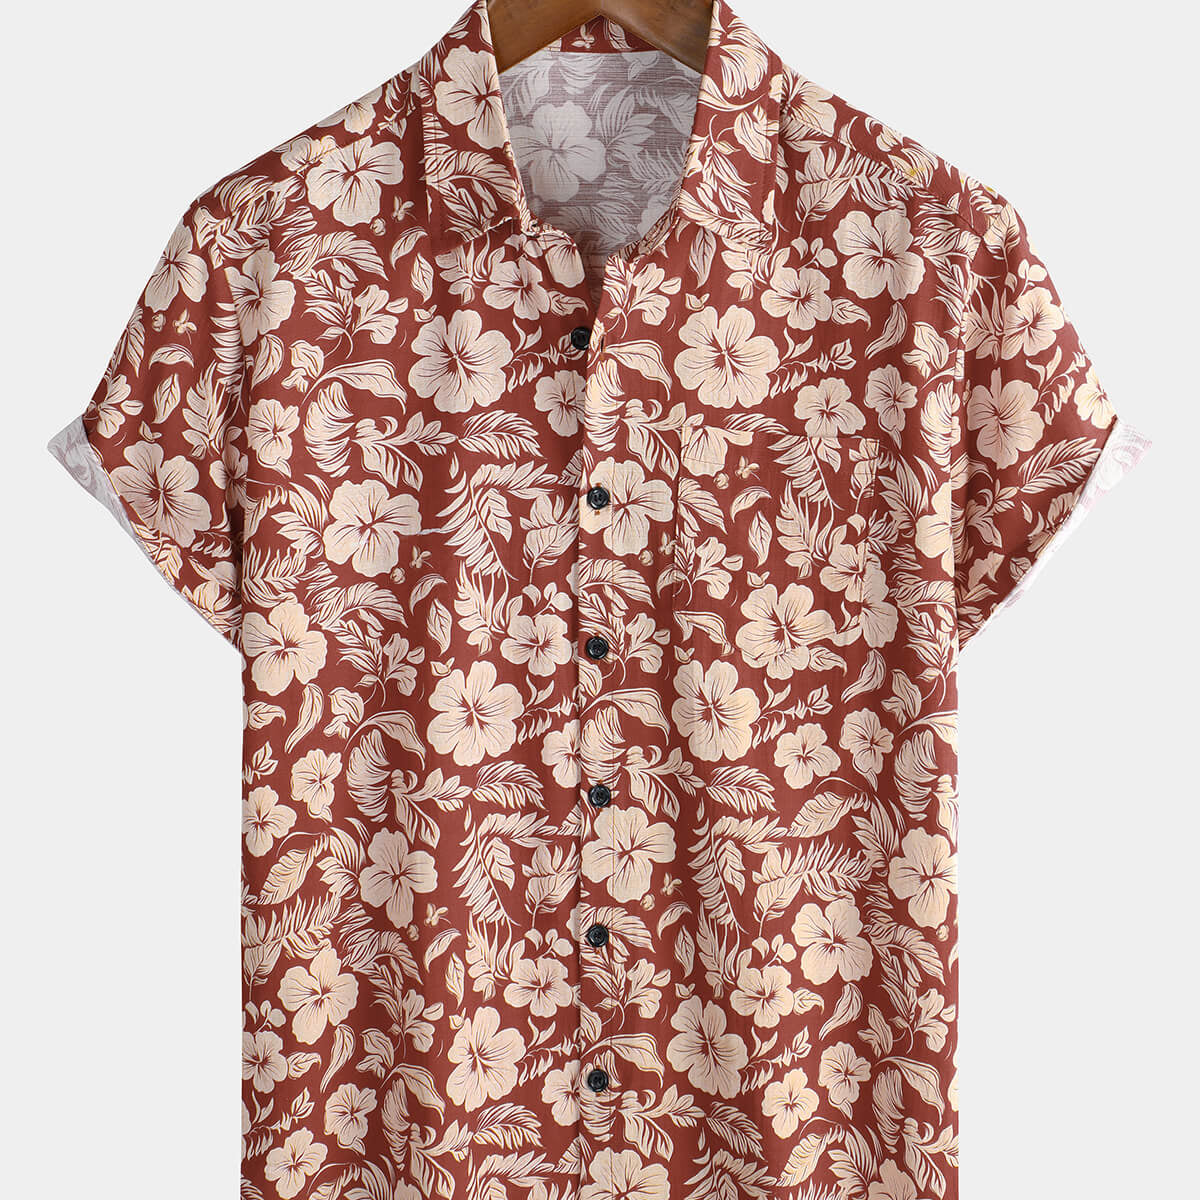 Men's Red Hawaiian Floral Holiday Casual Summer Short Sleeve Button Up Shirt